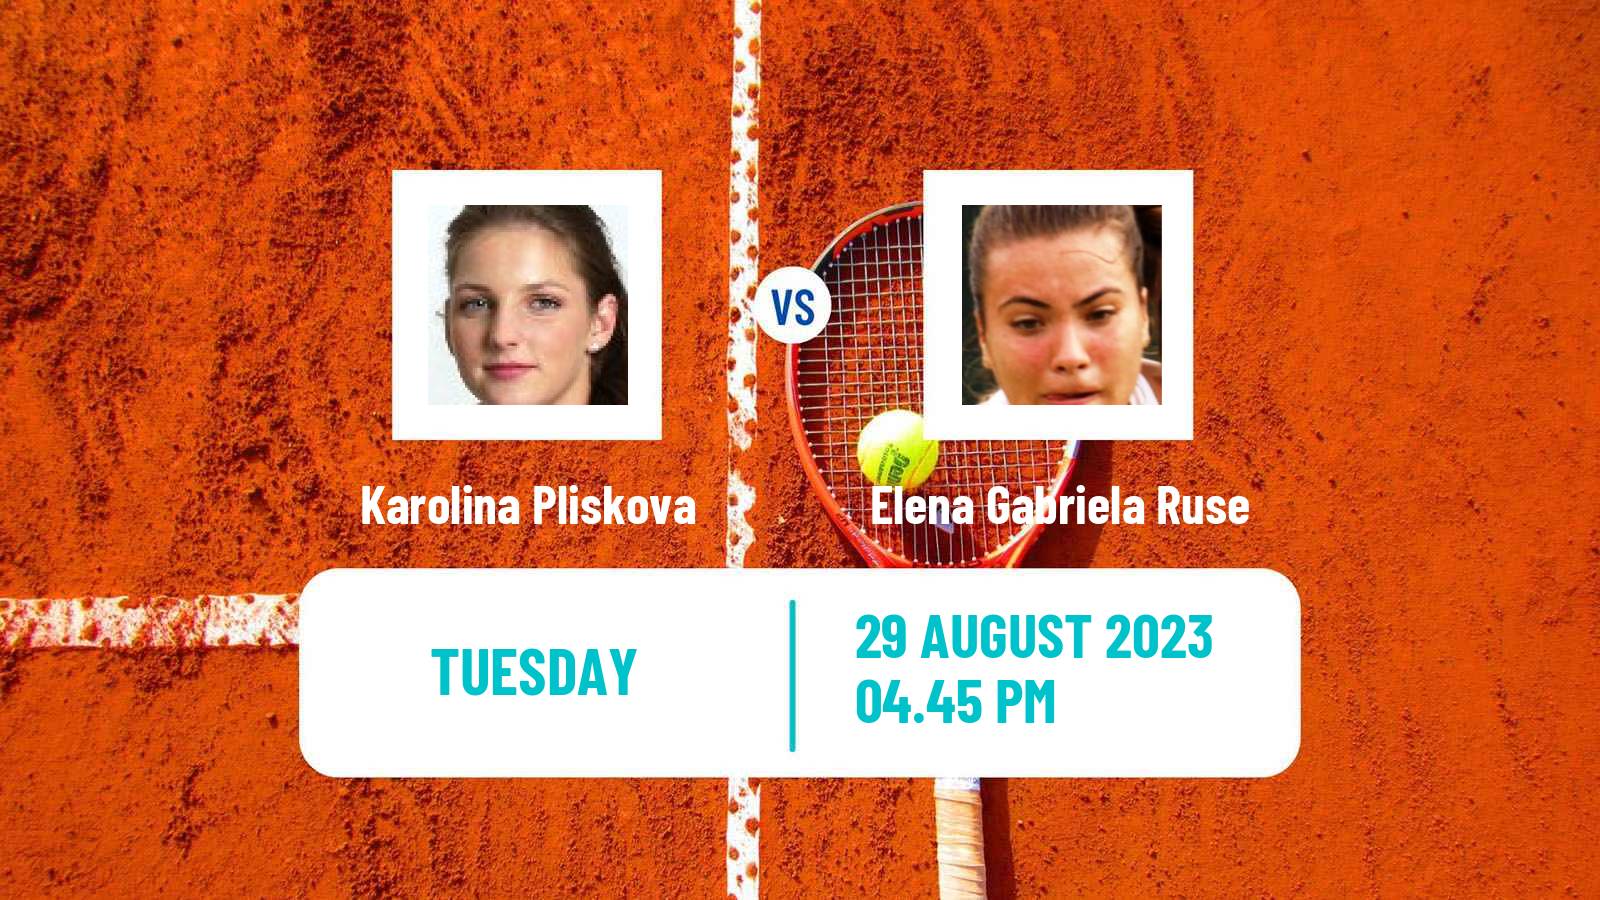 Tennis WTA US Open Karolina Pliskova - Elena Gabriela Ruse